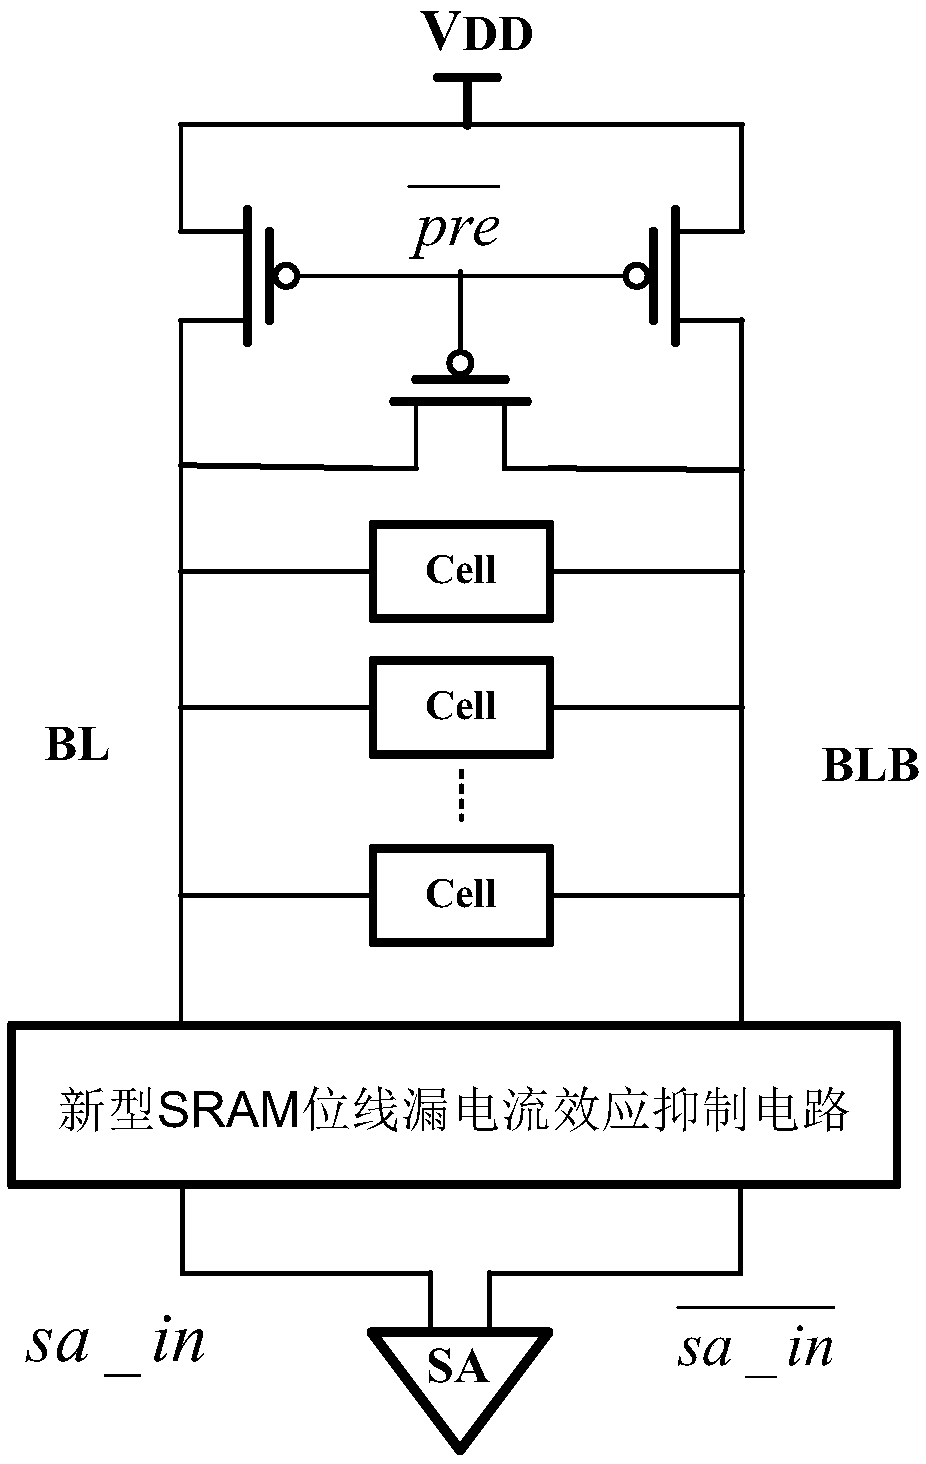 A sram bit line leakage current effect suppression circuit